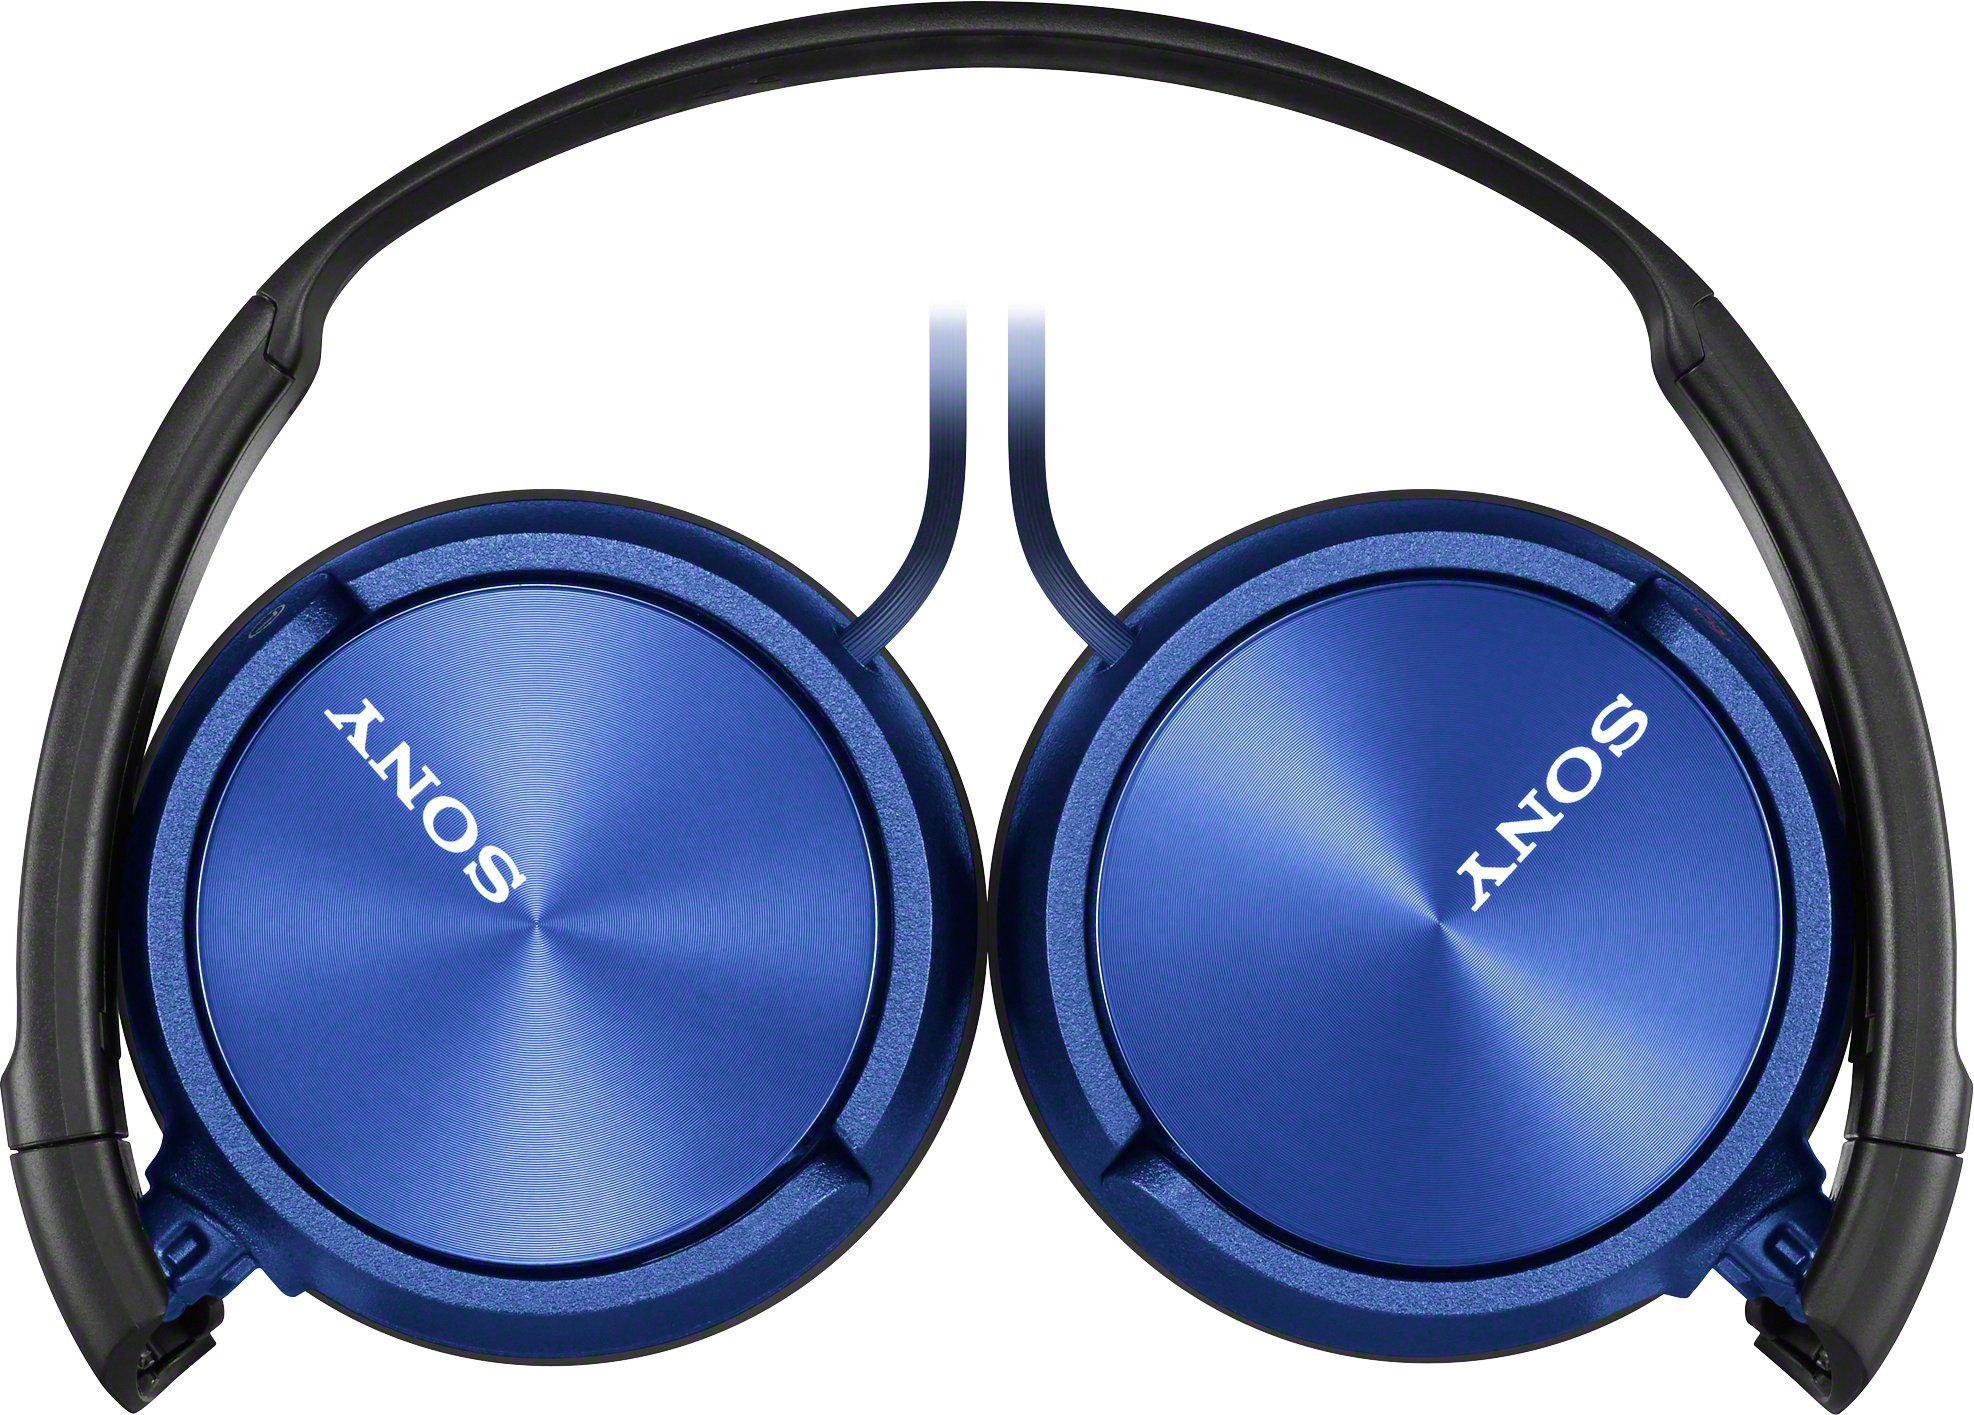 Sony blau Over-Ear-Kopfhörer MDR-ZX310